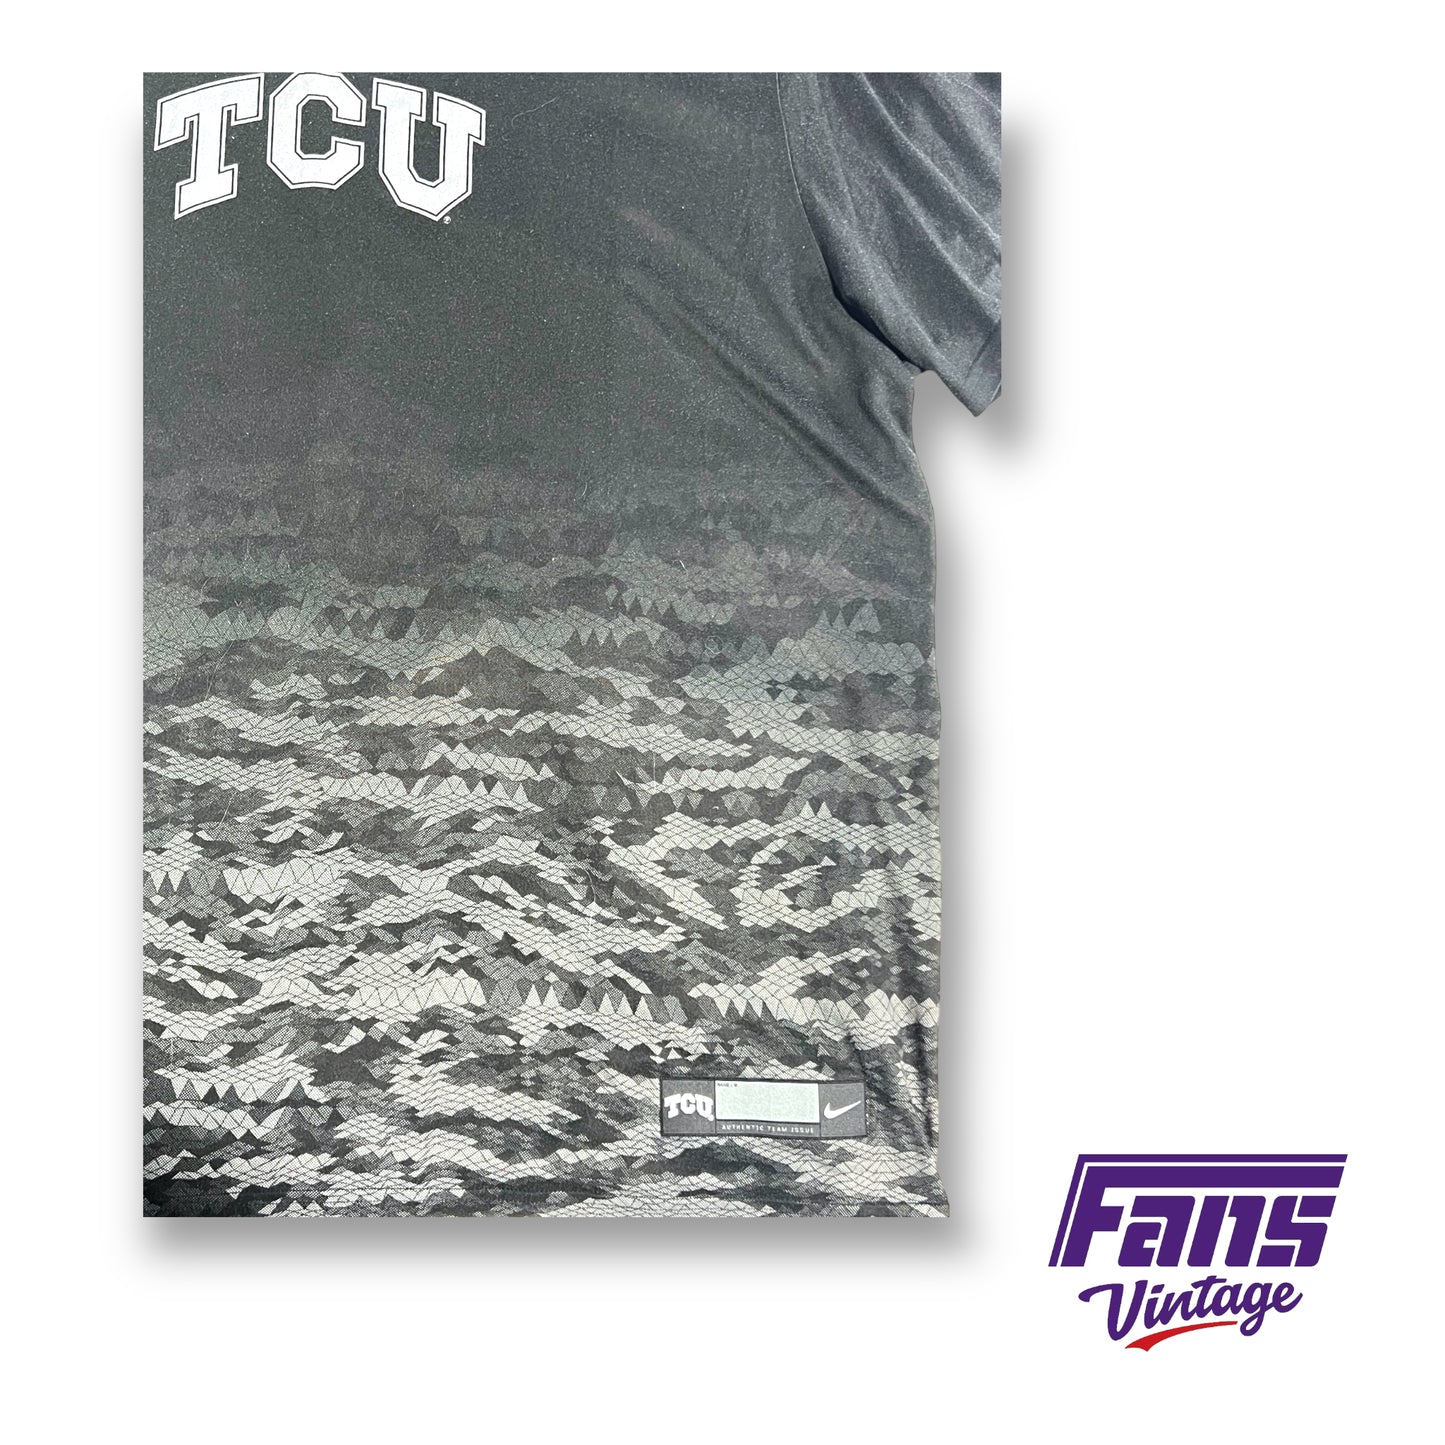 Insane Nike TCU Football Liberty Bowl tee - Cool Frogskin pattern